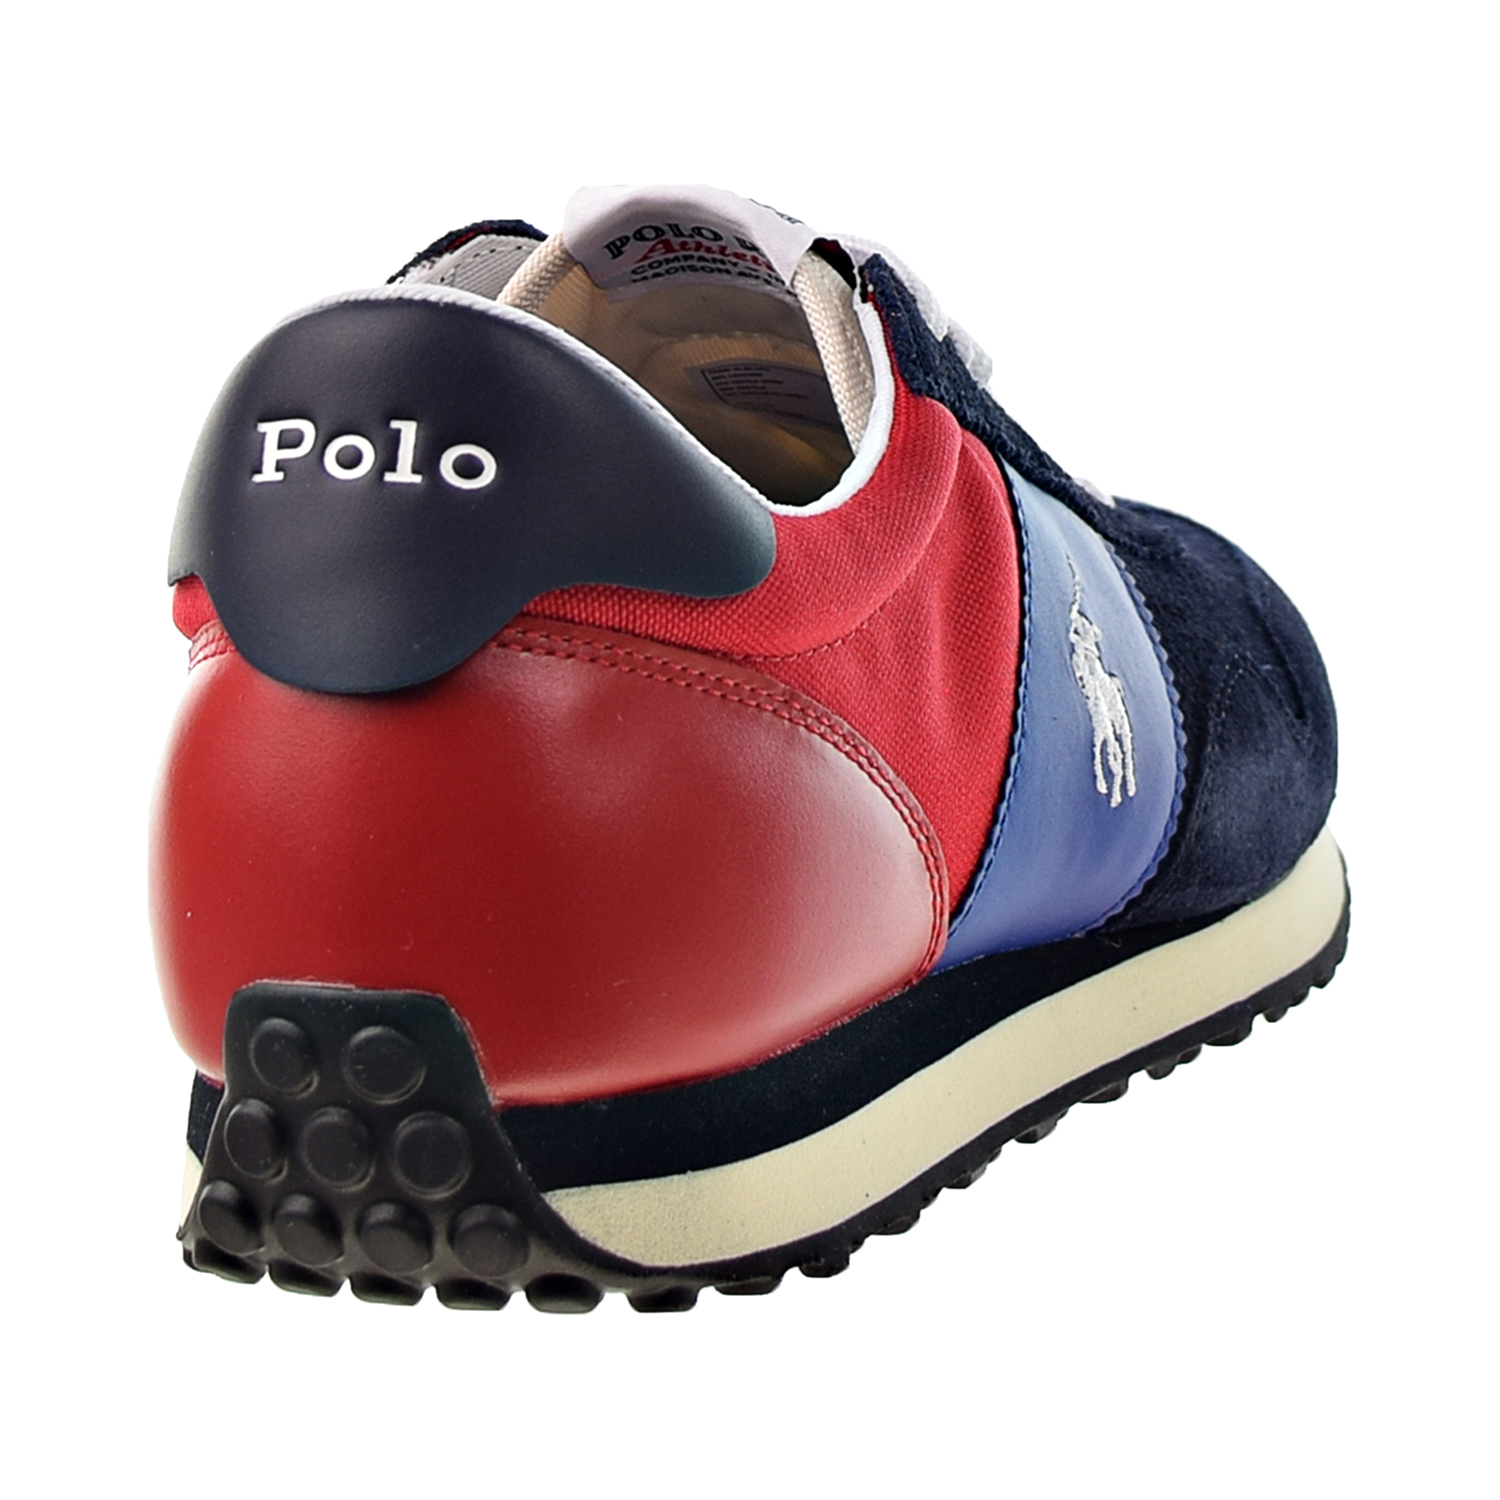 Polo Ralph Lauren Train 85 Men's Shoes Navy-Red   809830109-001 - image 3 of 6